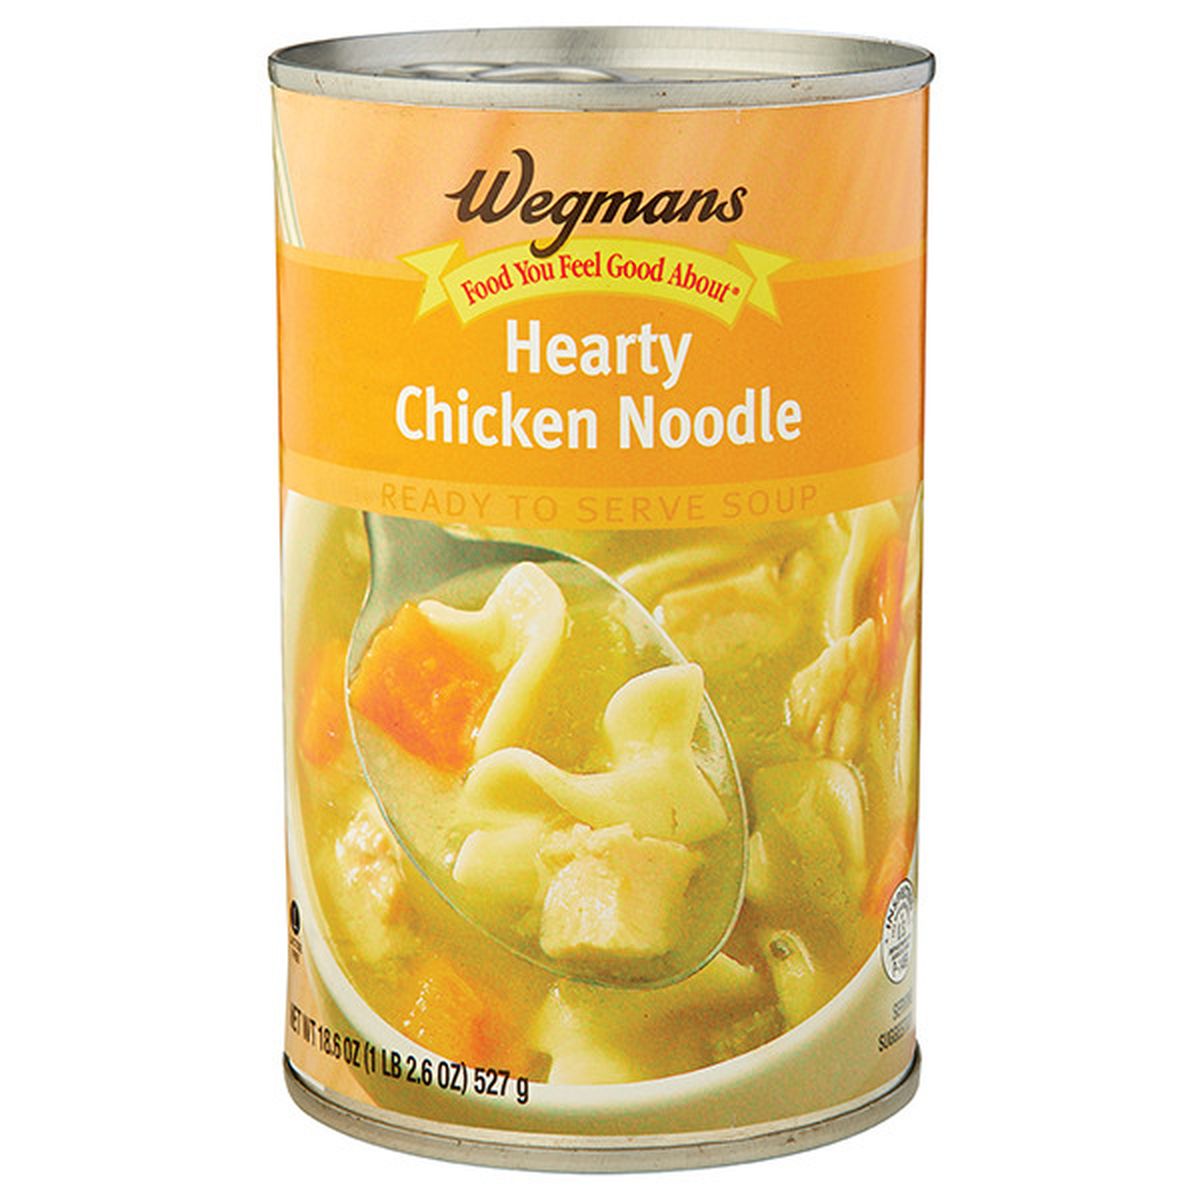 Calories in Wegmans Hearty Chicken Noodle Soup